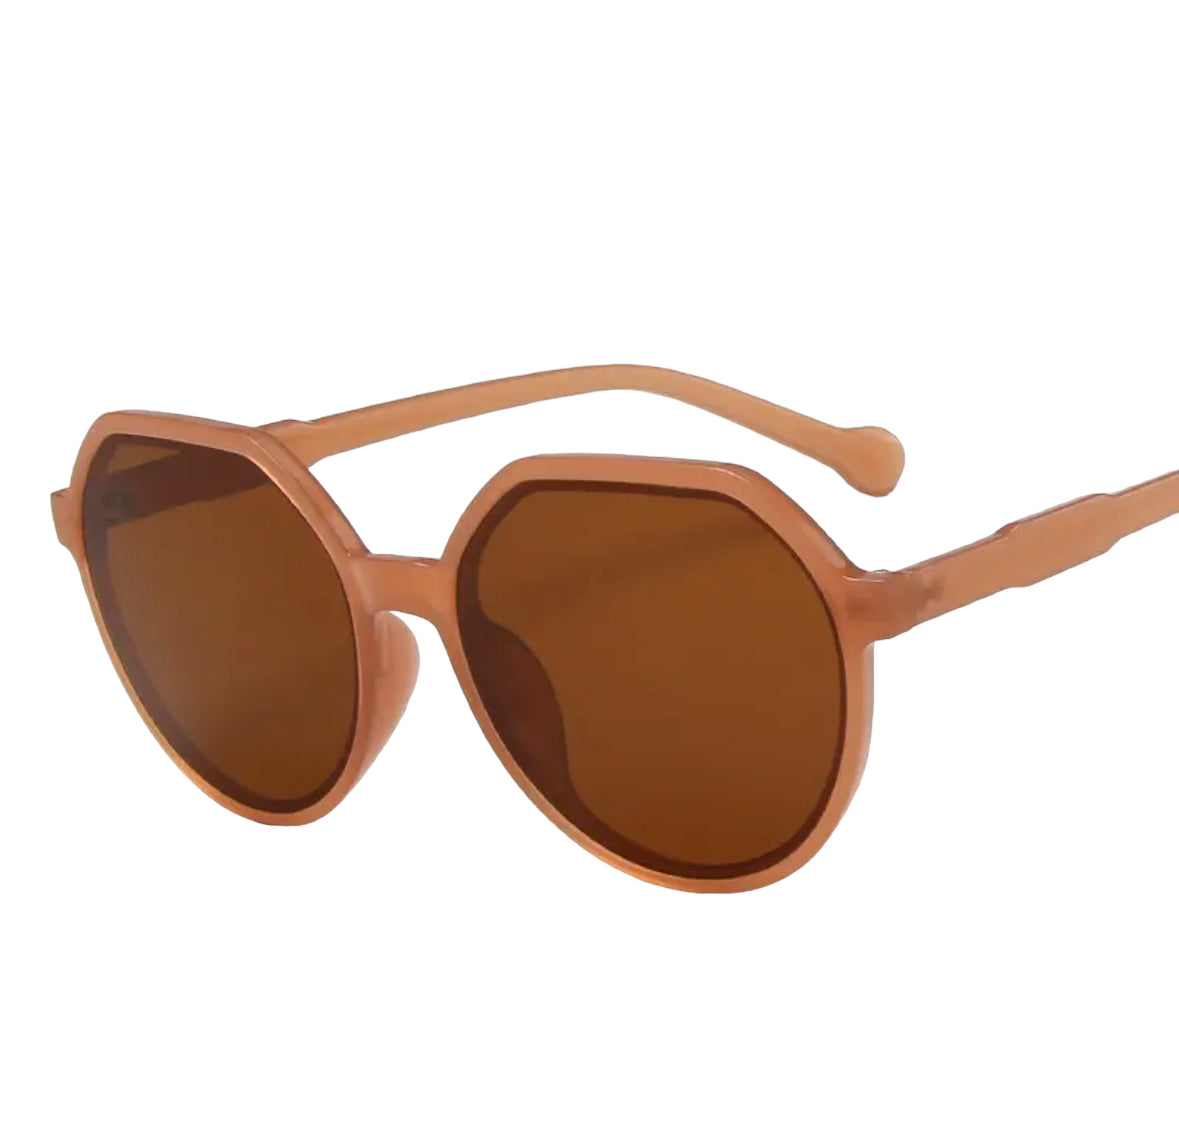 Cloe Brown Sunglasses